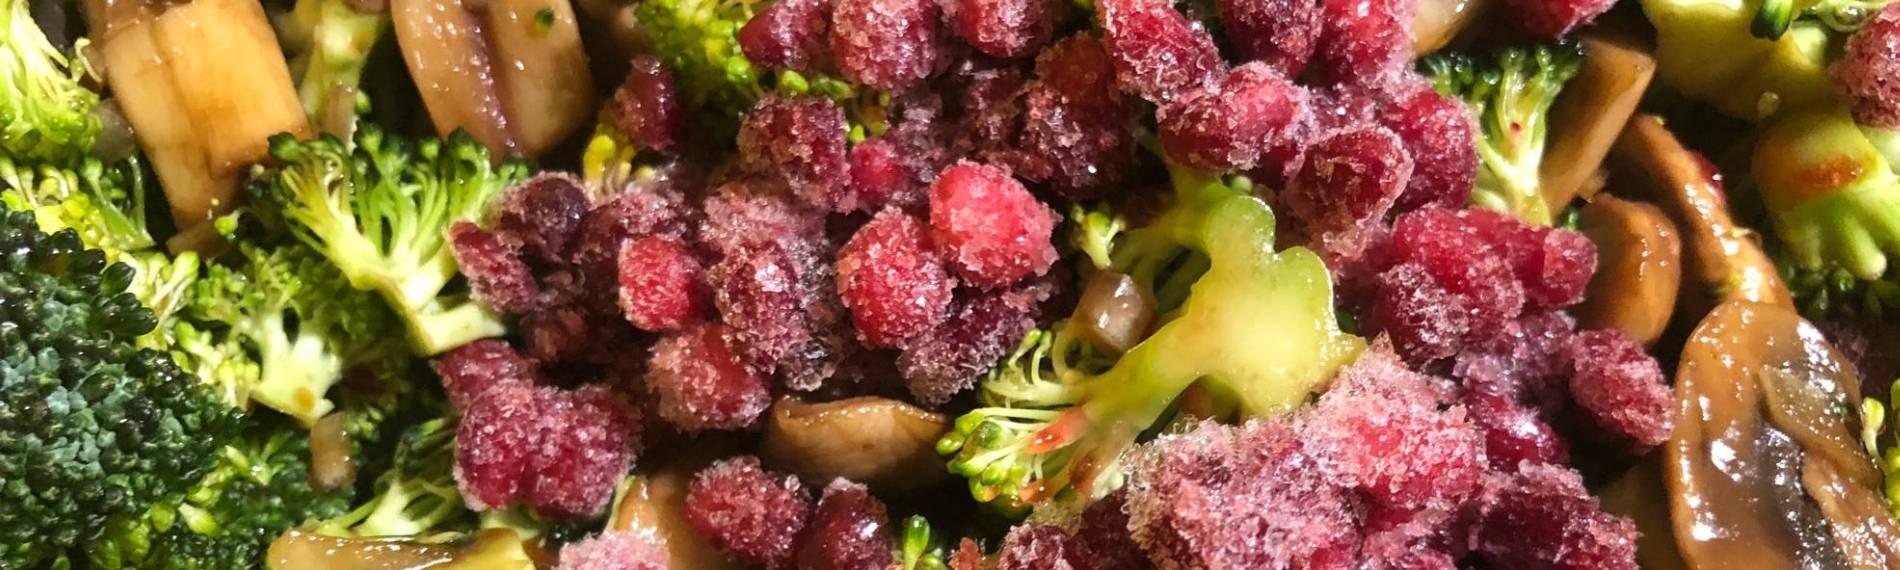 Brokkolisalat vegan mit Granatapfelkernen und Pilzen